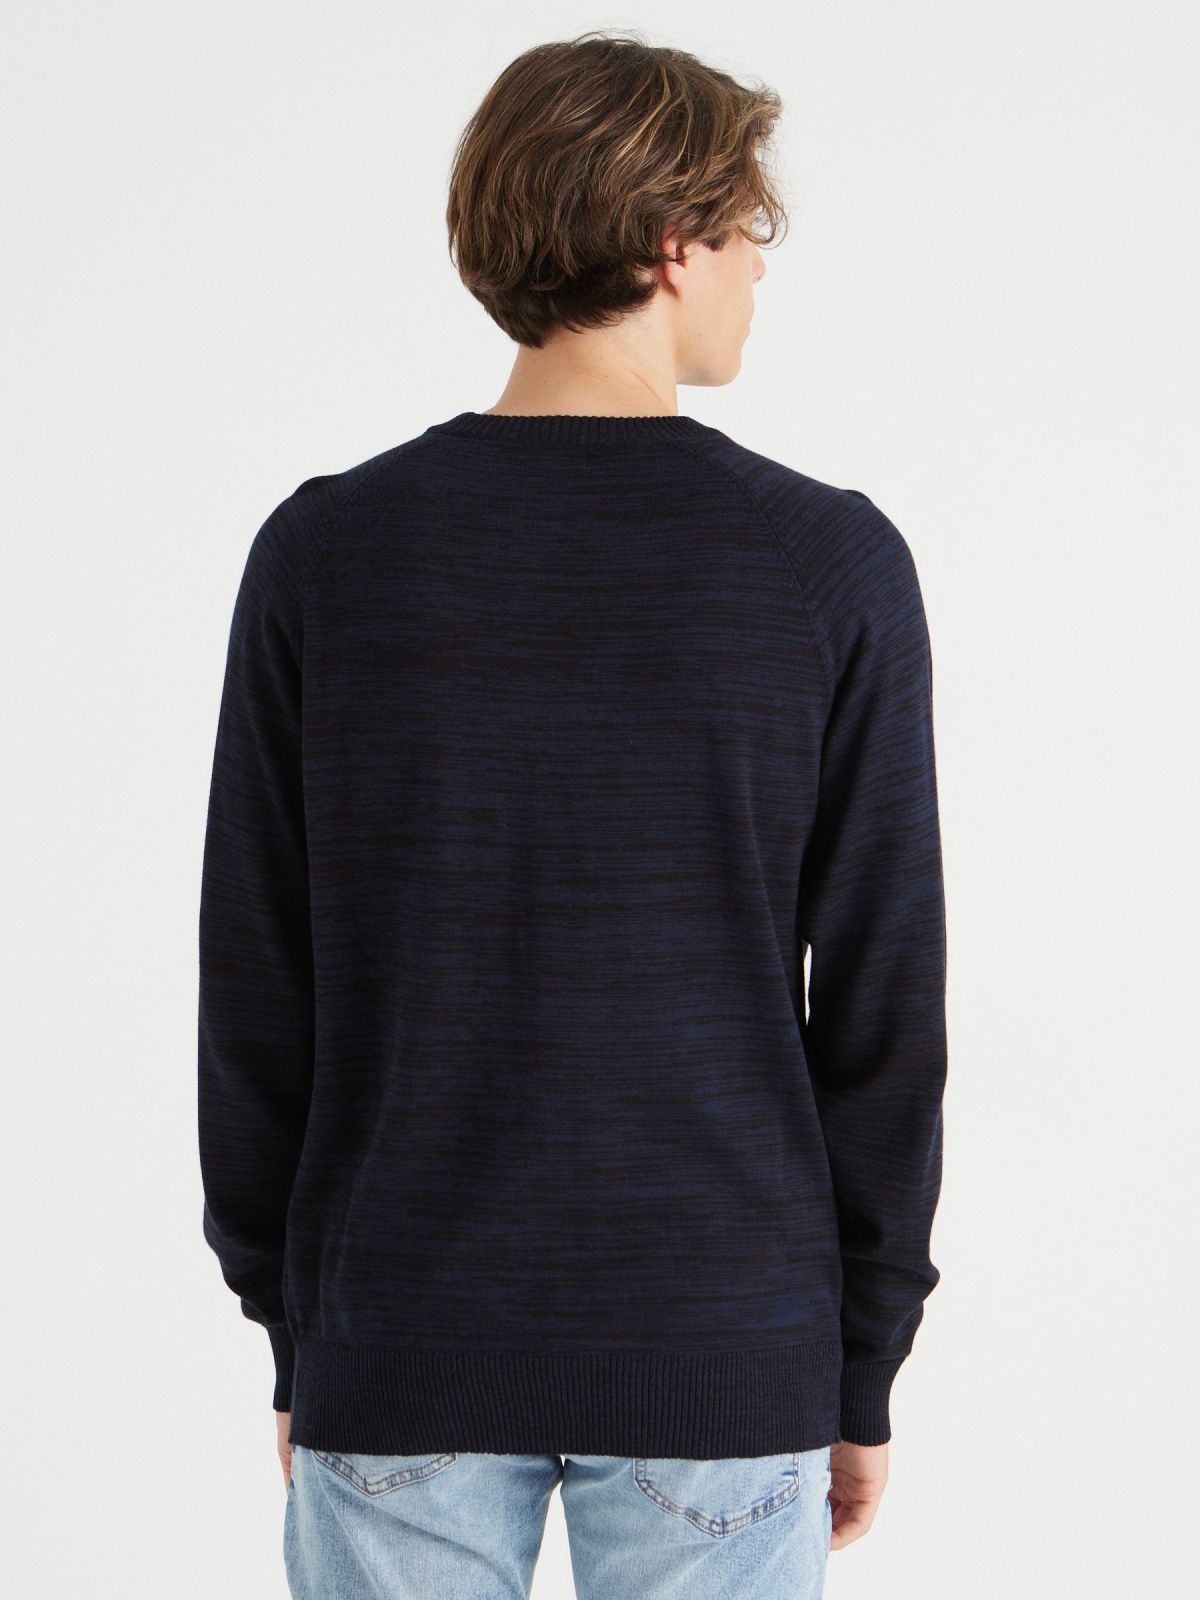 Basic mottled sweater black middle back view